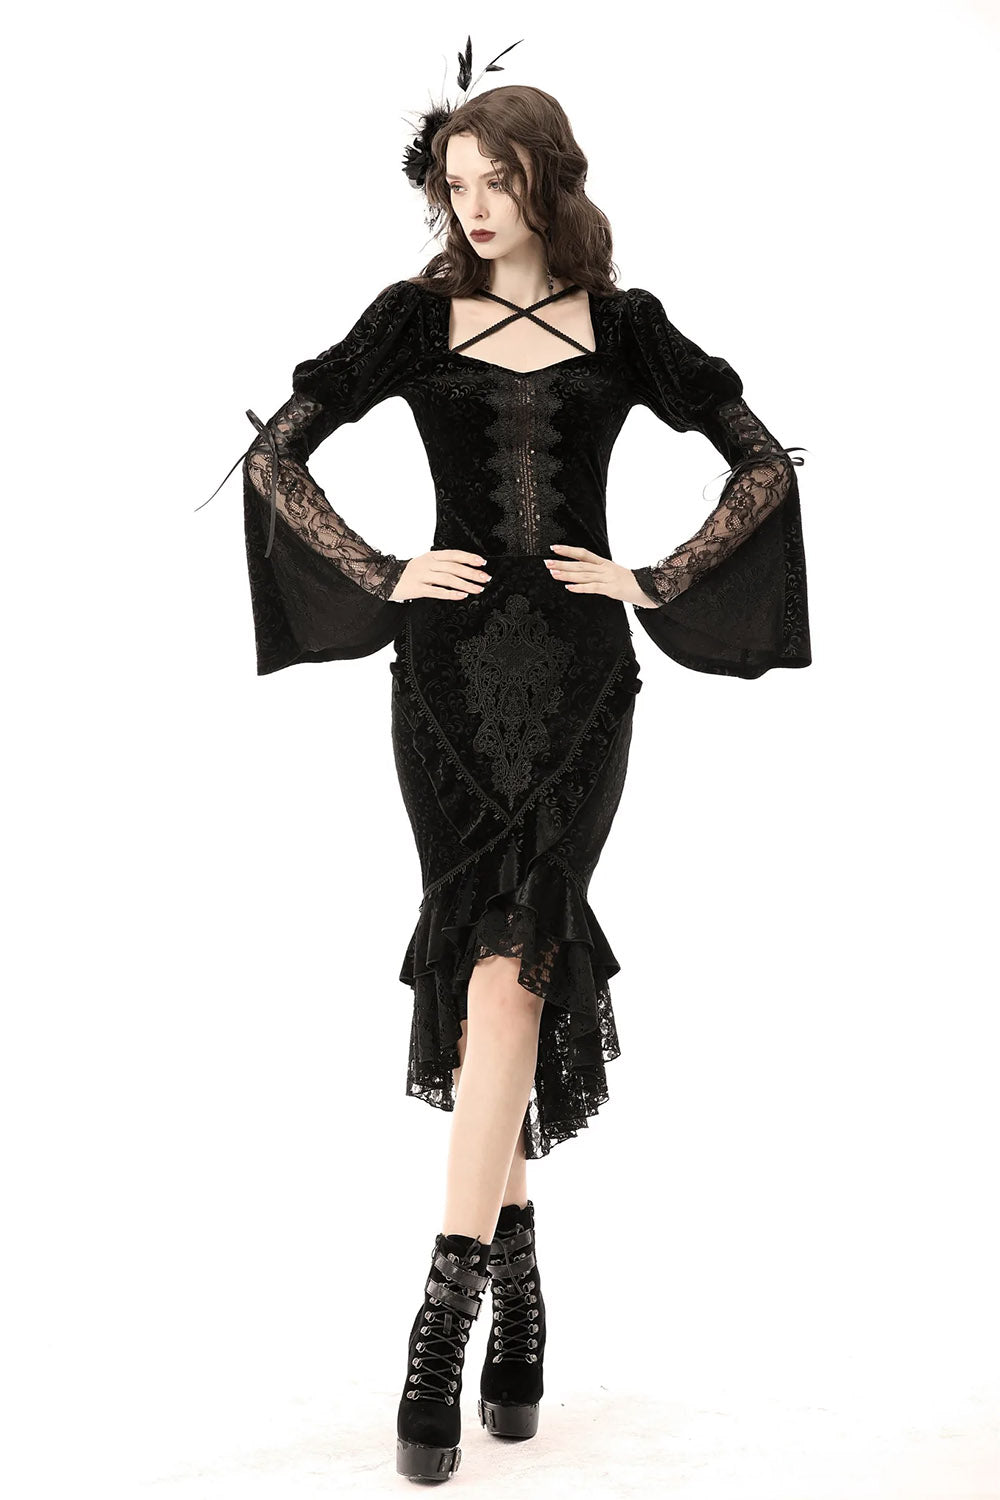 Ghostling Vintage Goth Skirt